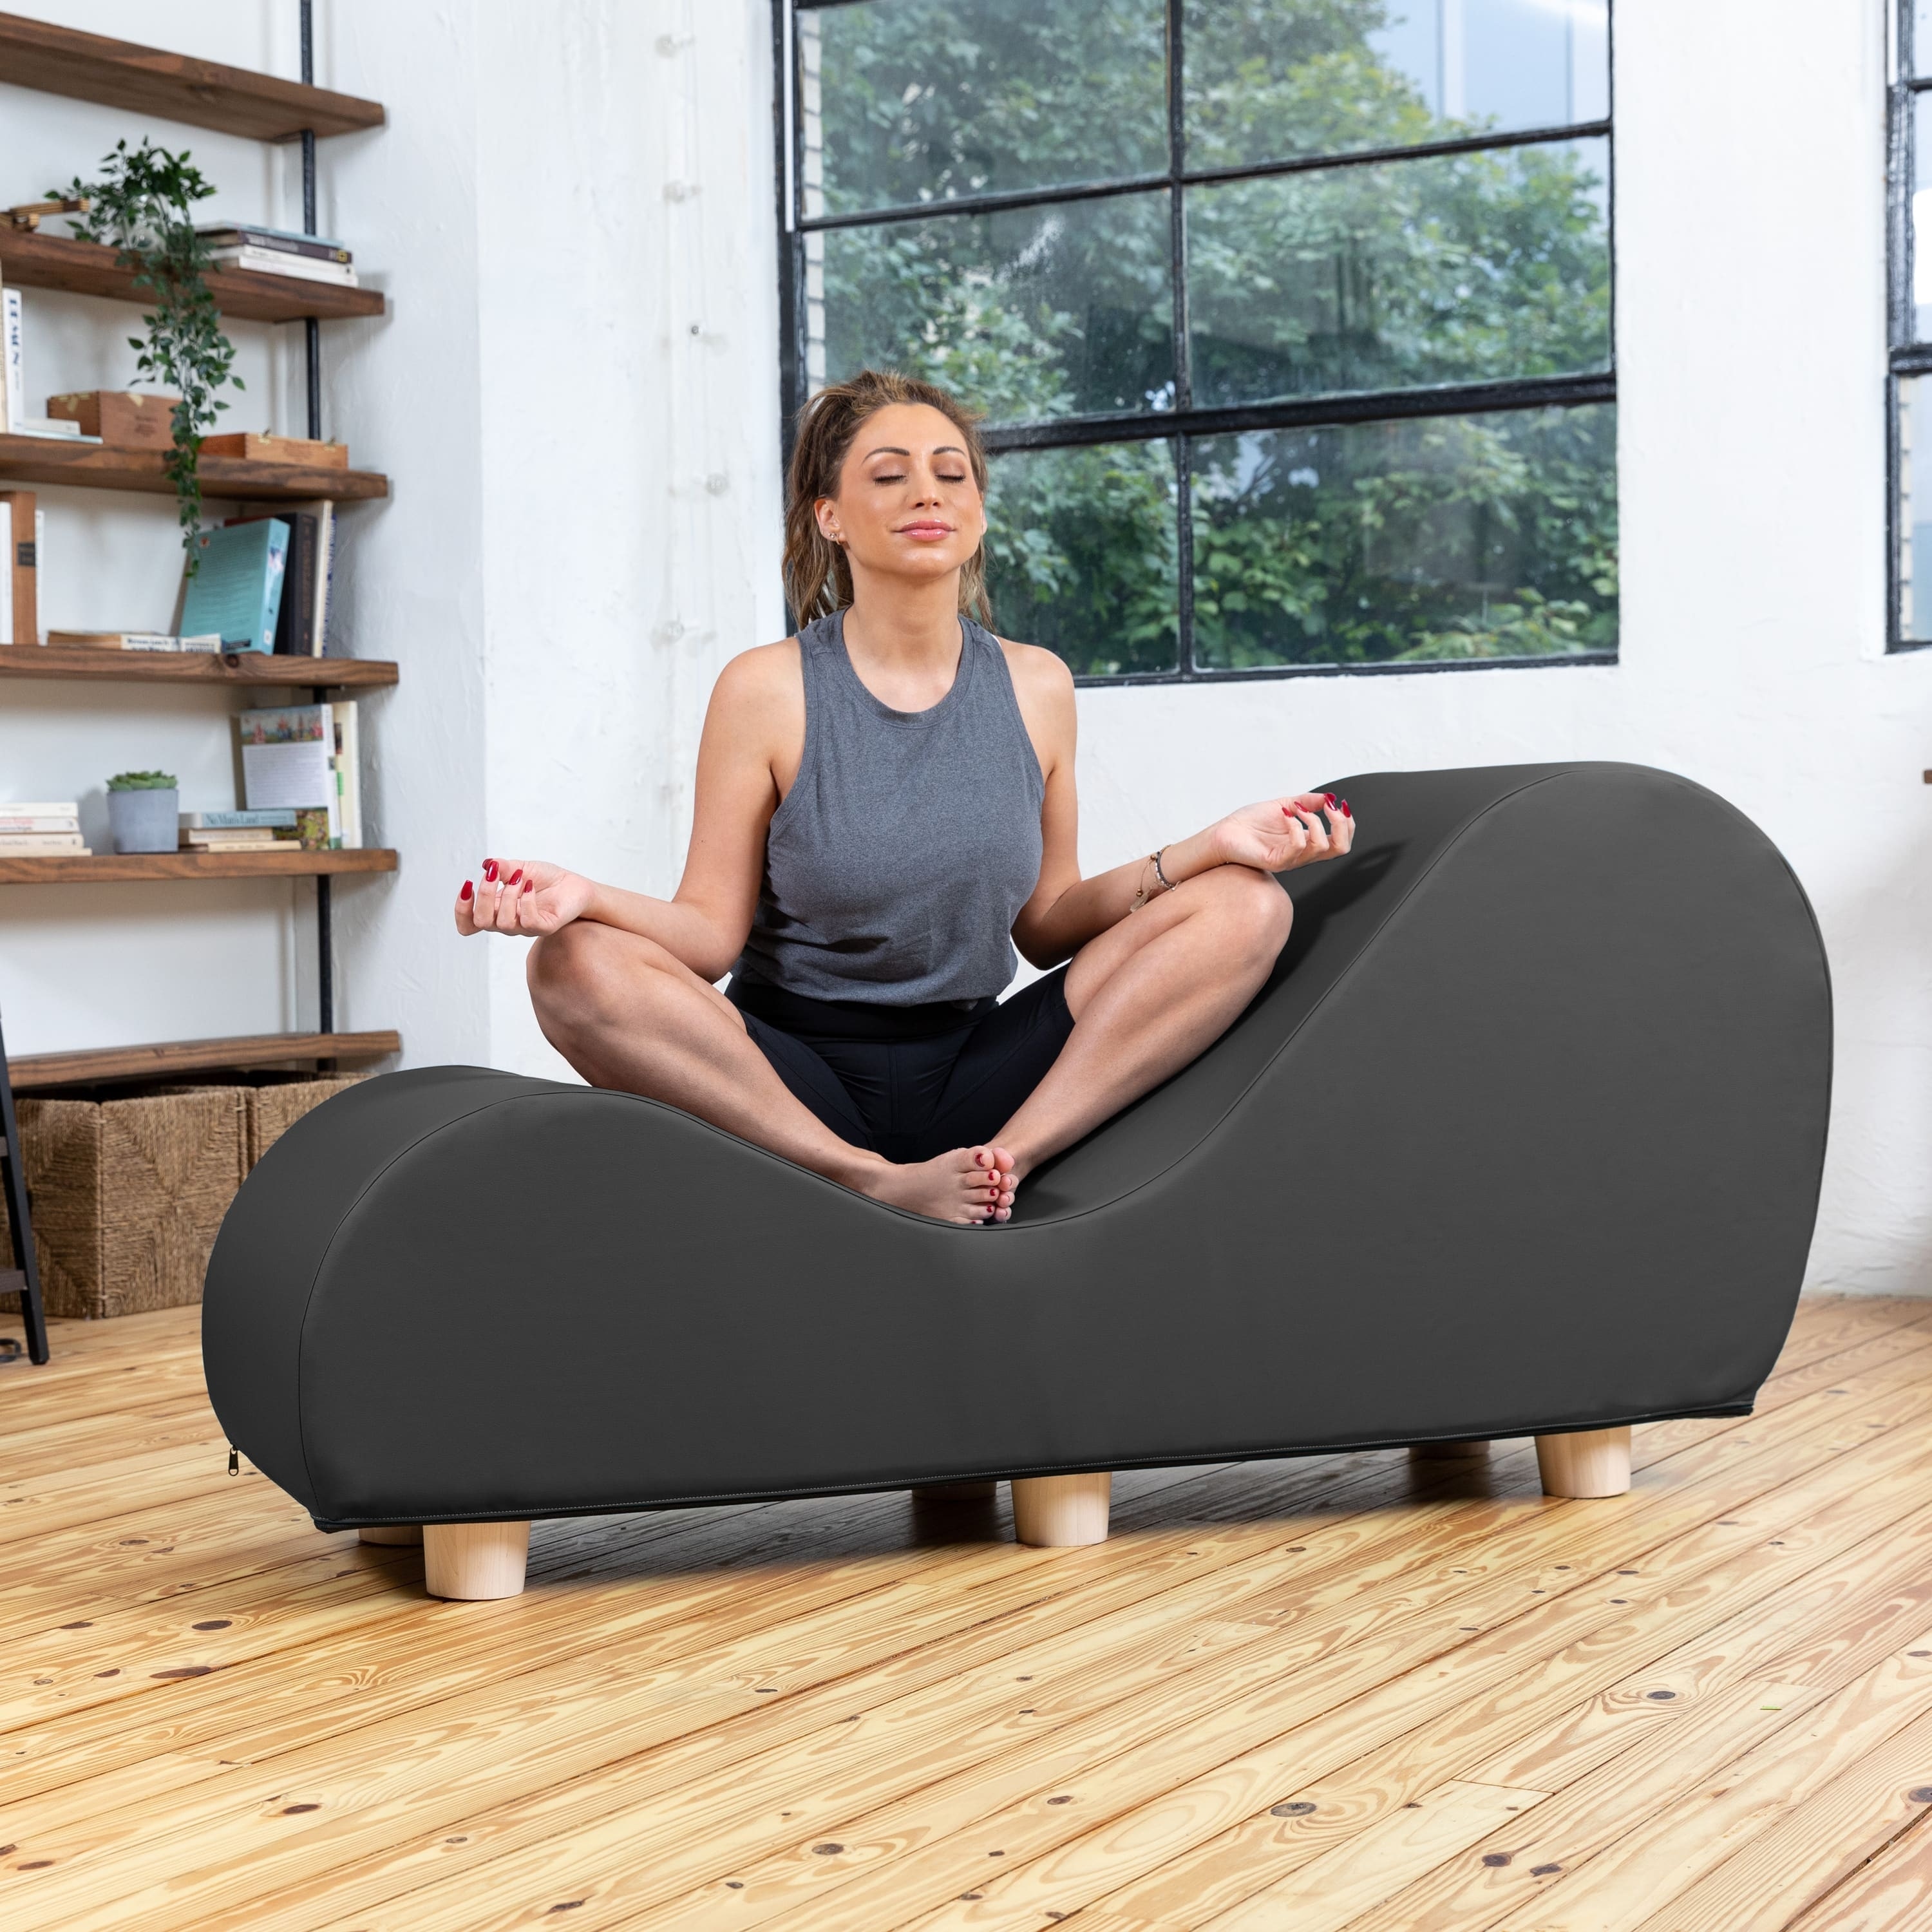 Avana Yoga Chaise Lounge w/ Maple Wood Feet - On Sale - Bed Bath